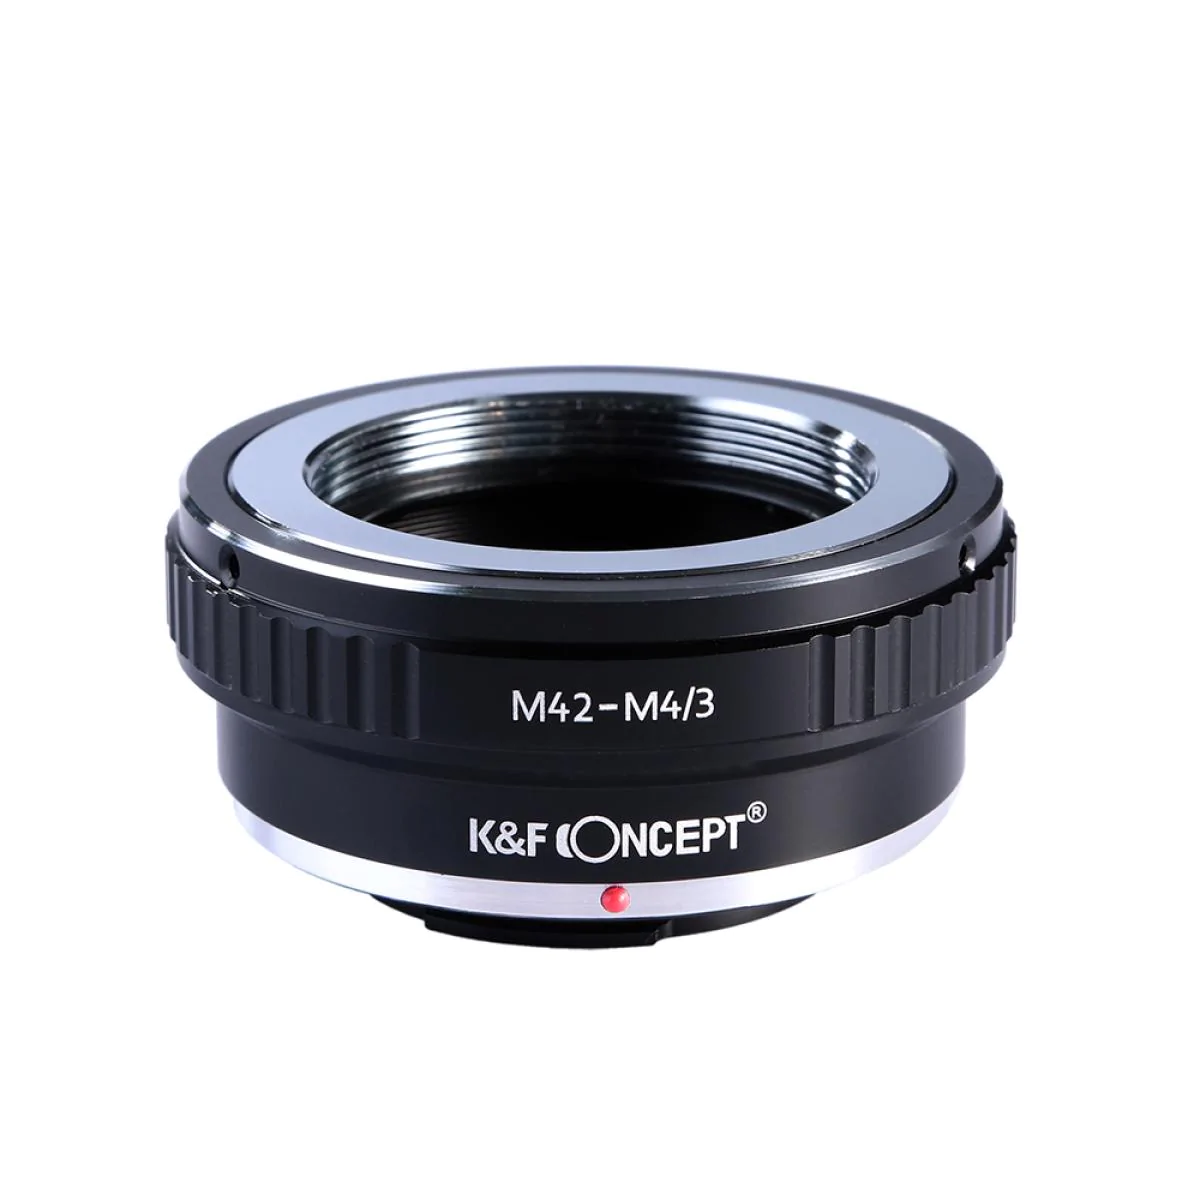 K&F M42 Lenses to M43 MFT Mount Camera Adapter K&F Concept Lens Mount Adapter